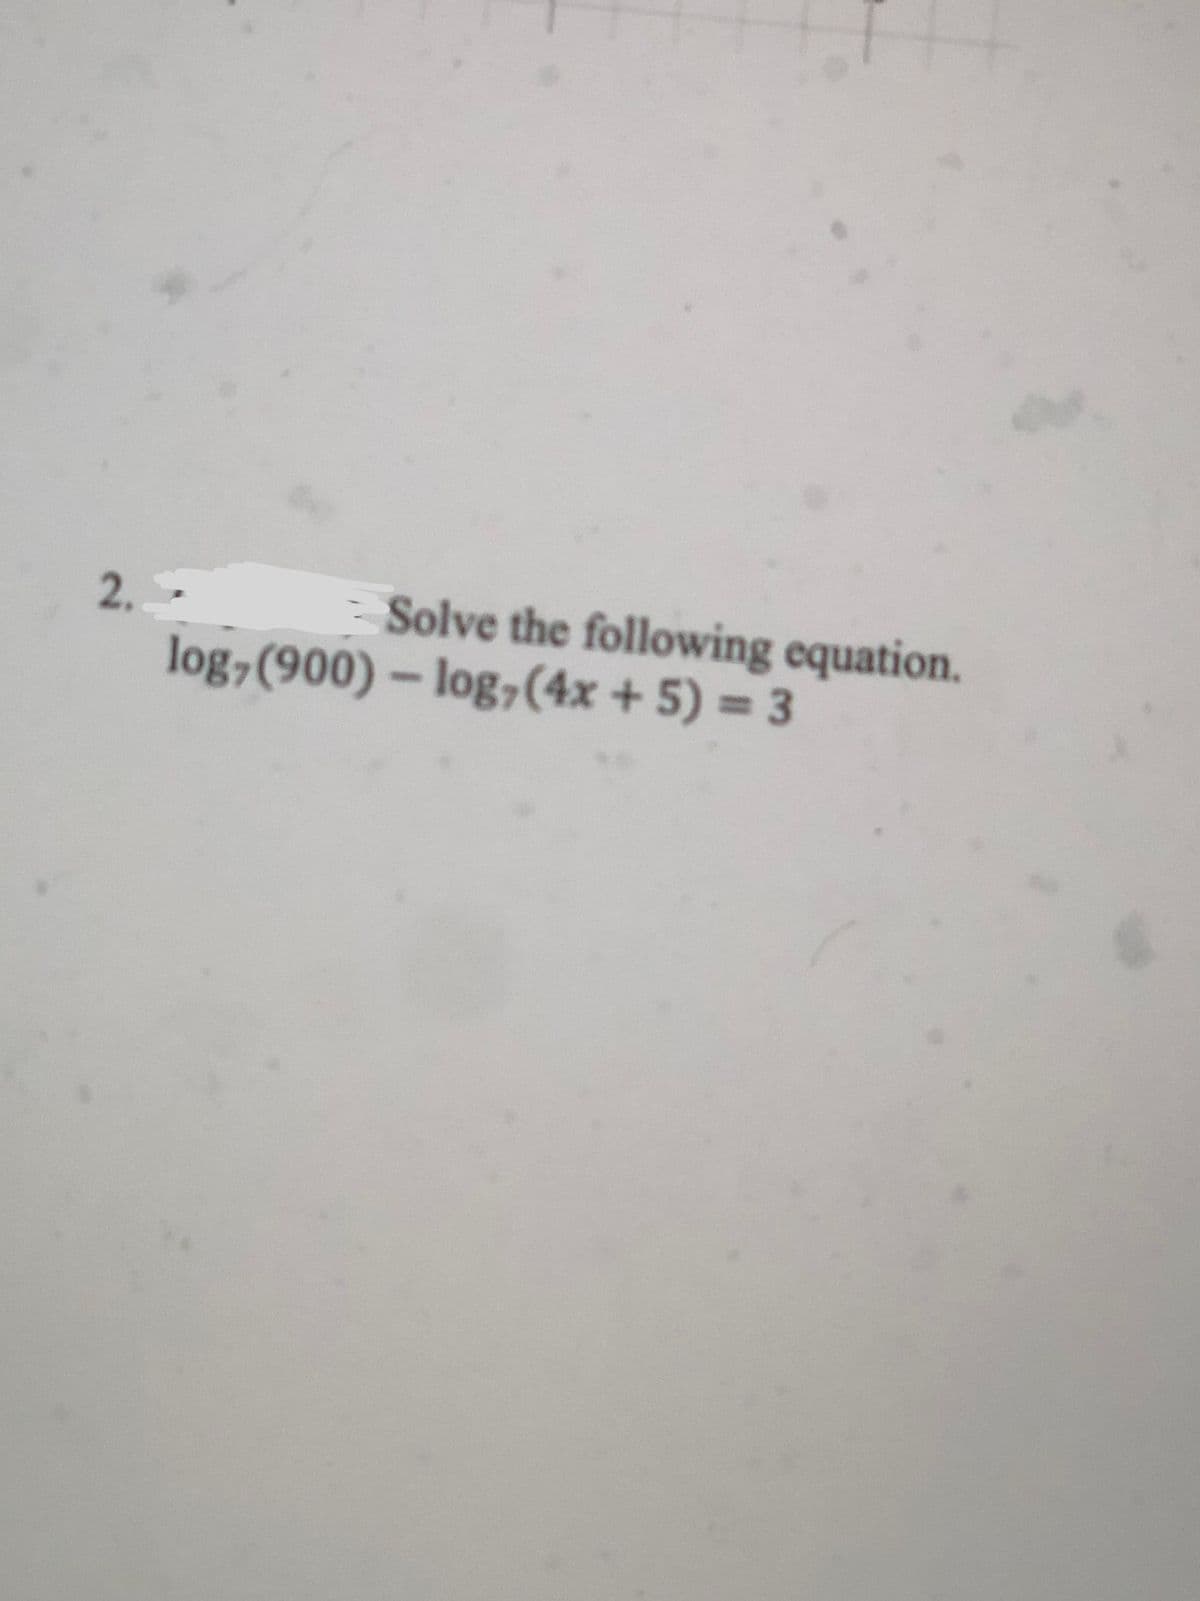 2.-
Solve the following equation.
log,(900) – log,(4x + 5) = 3
